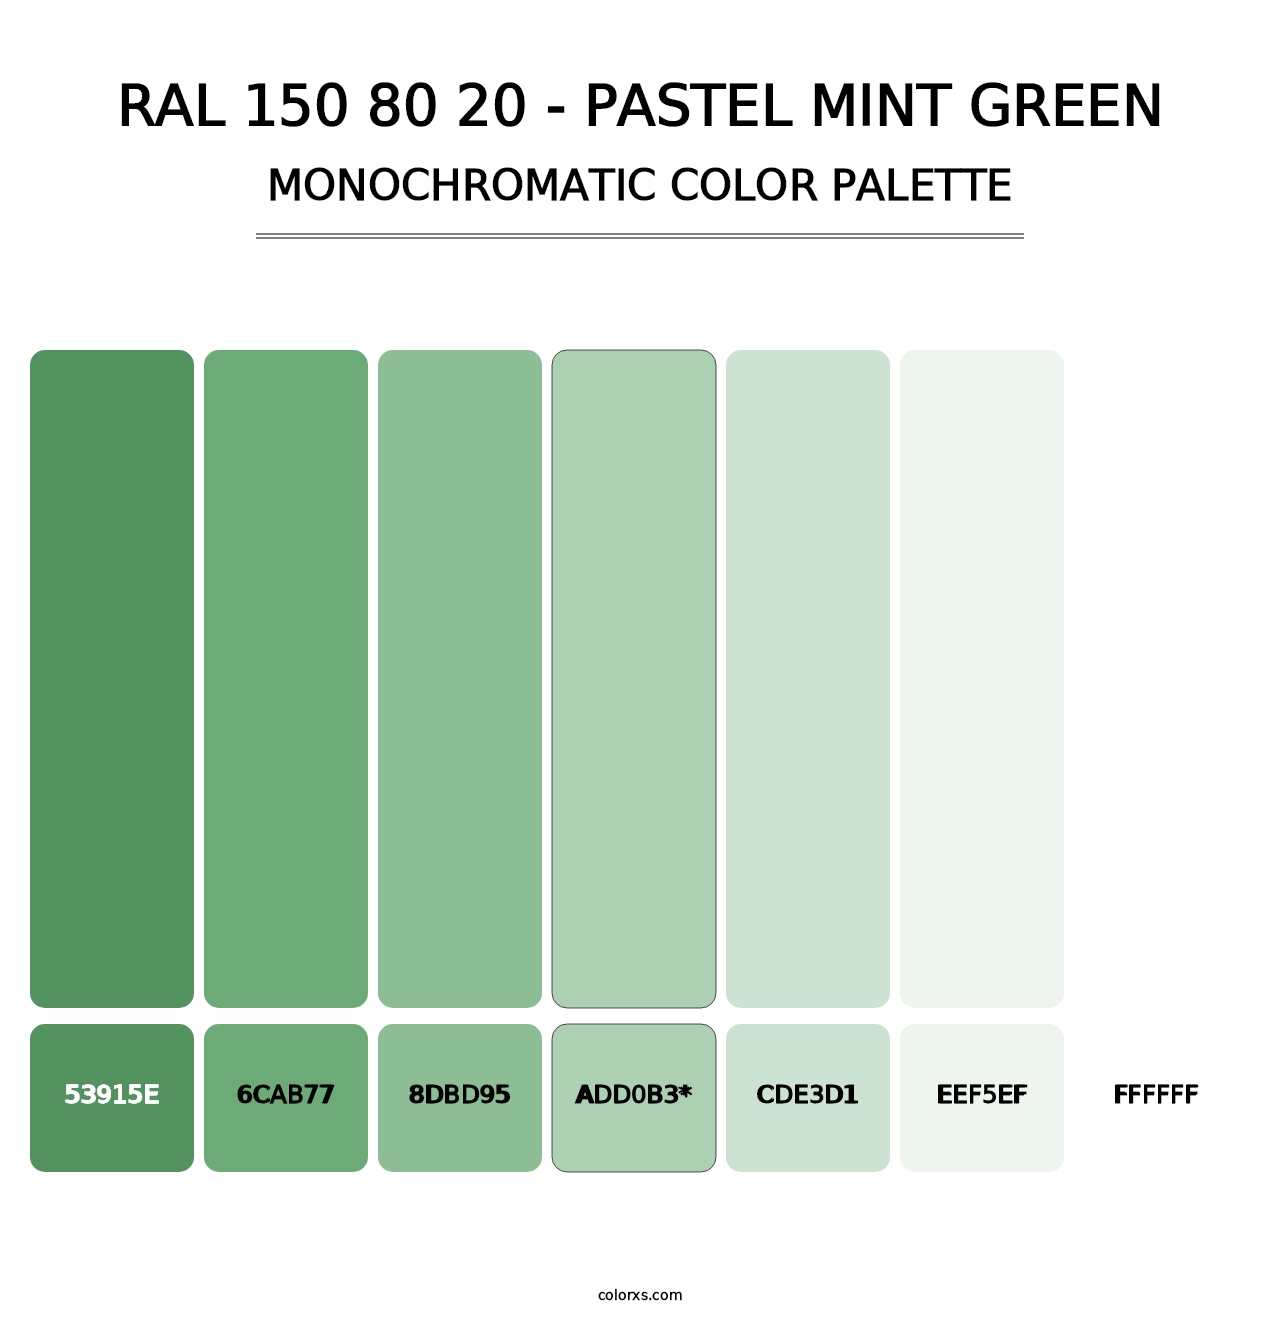 RAL 150 80 20 - Pastel Mint Green - Monochromatic Color Palette